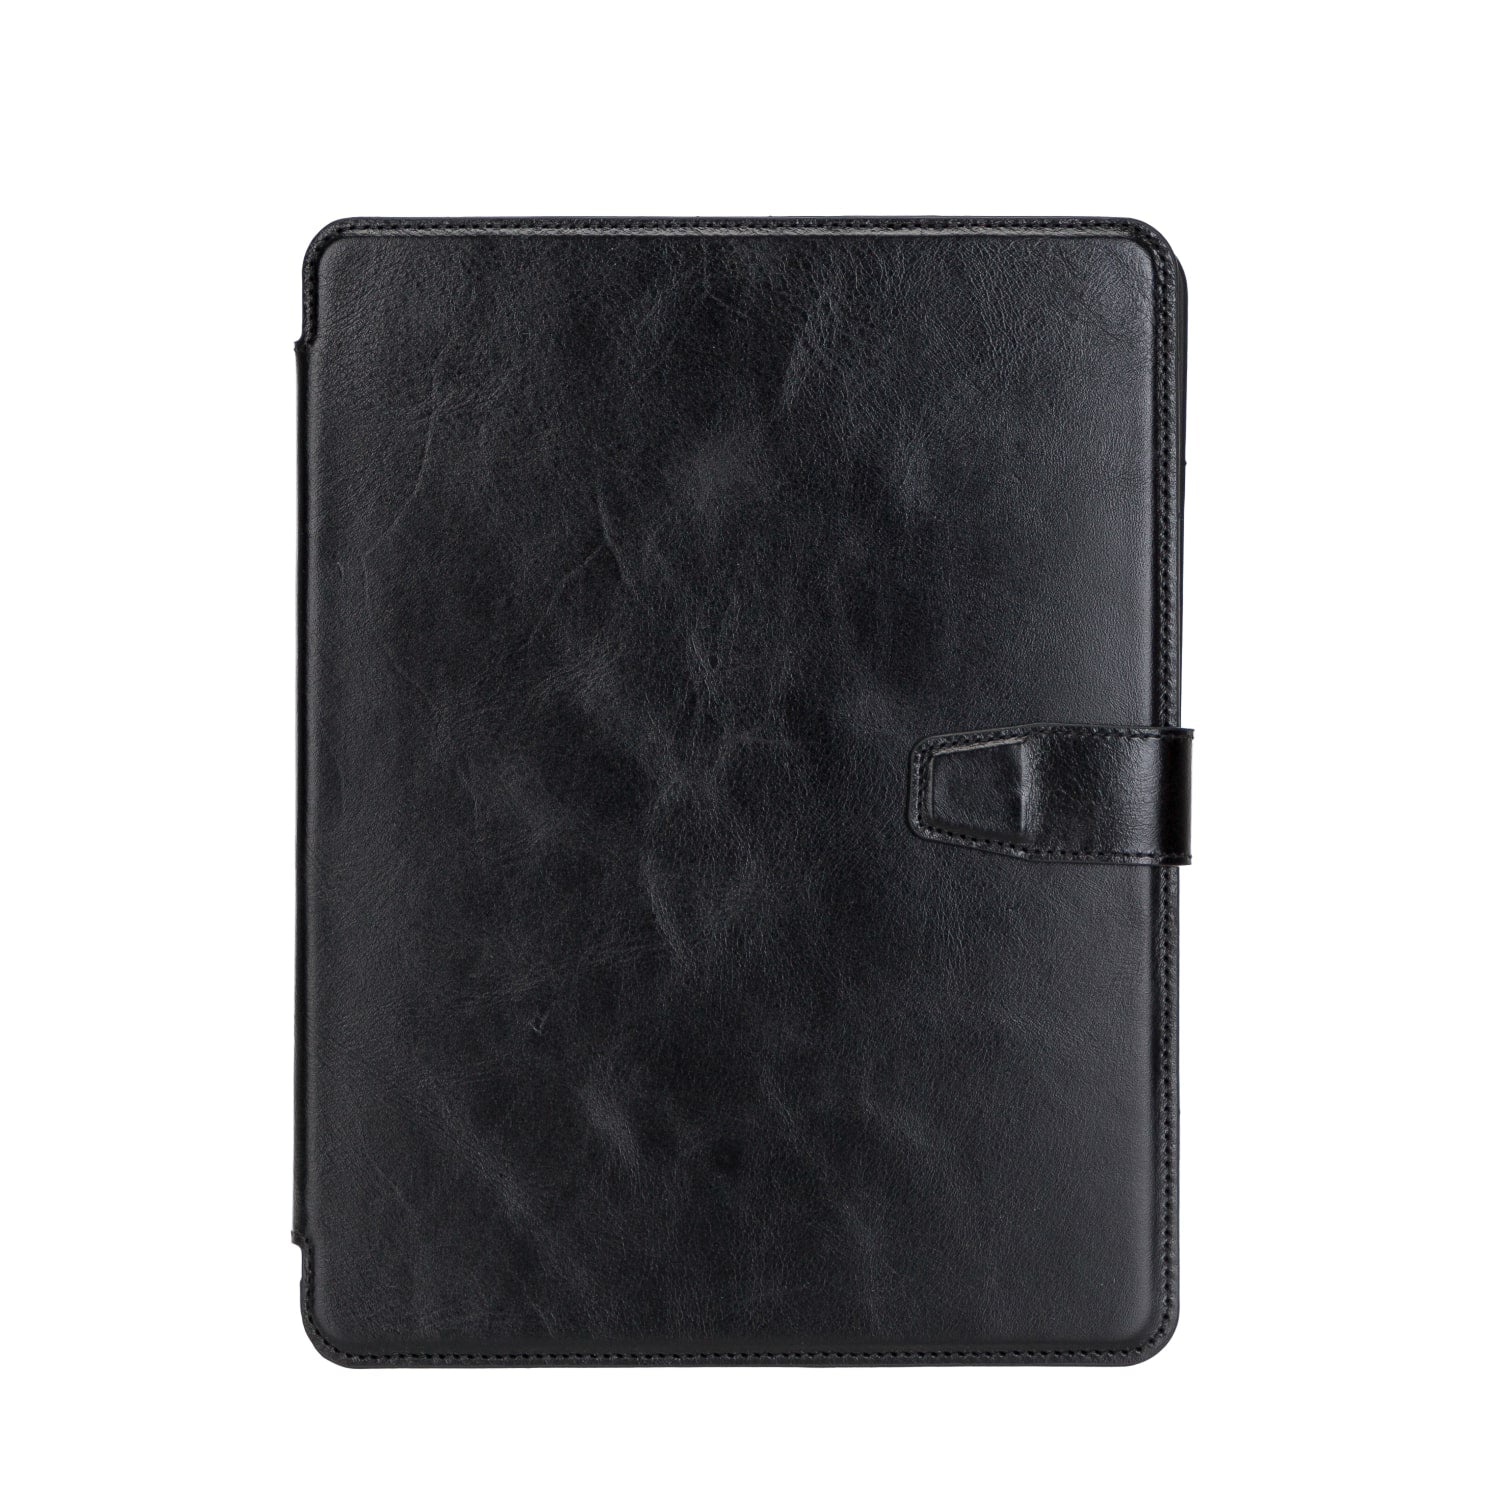 Black Leather iPad Pro 11 Inc Smart Folio Case with Apple Pen Holder - Bomonti - 3